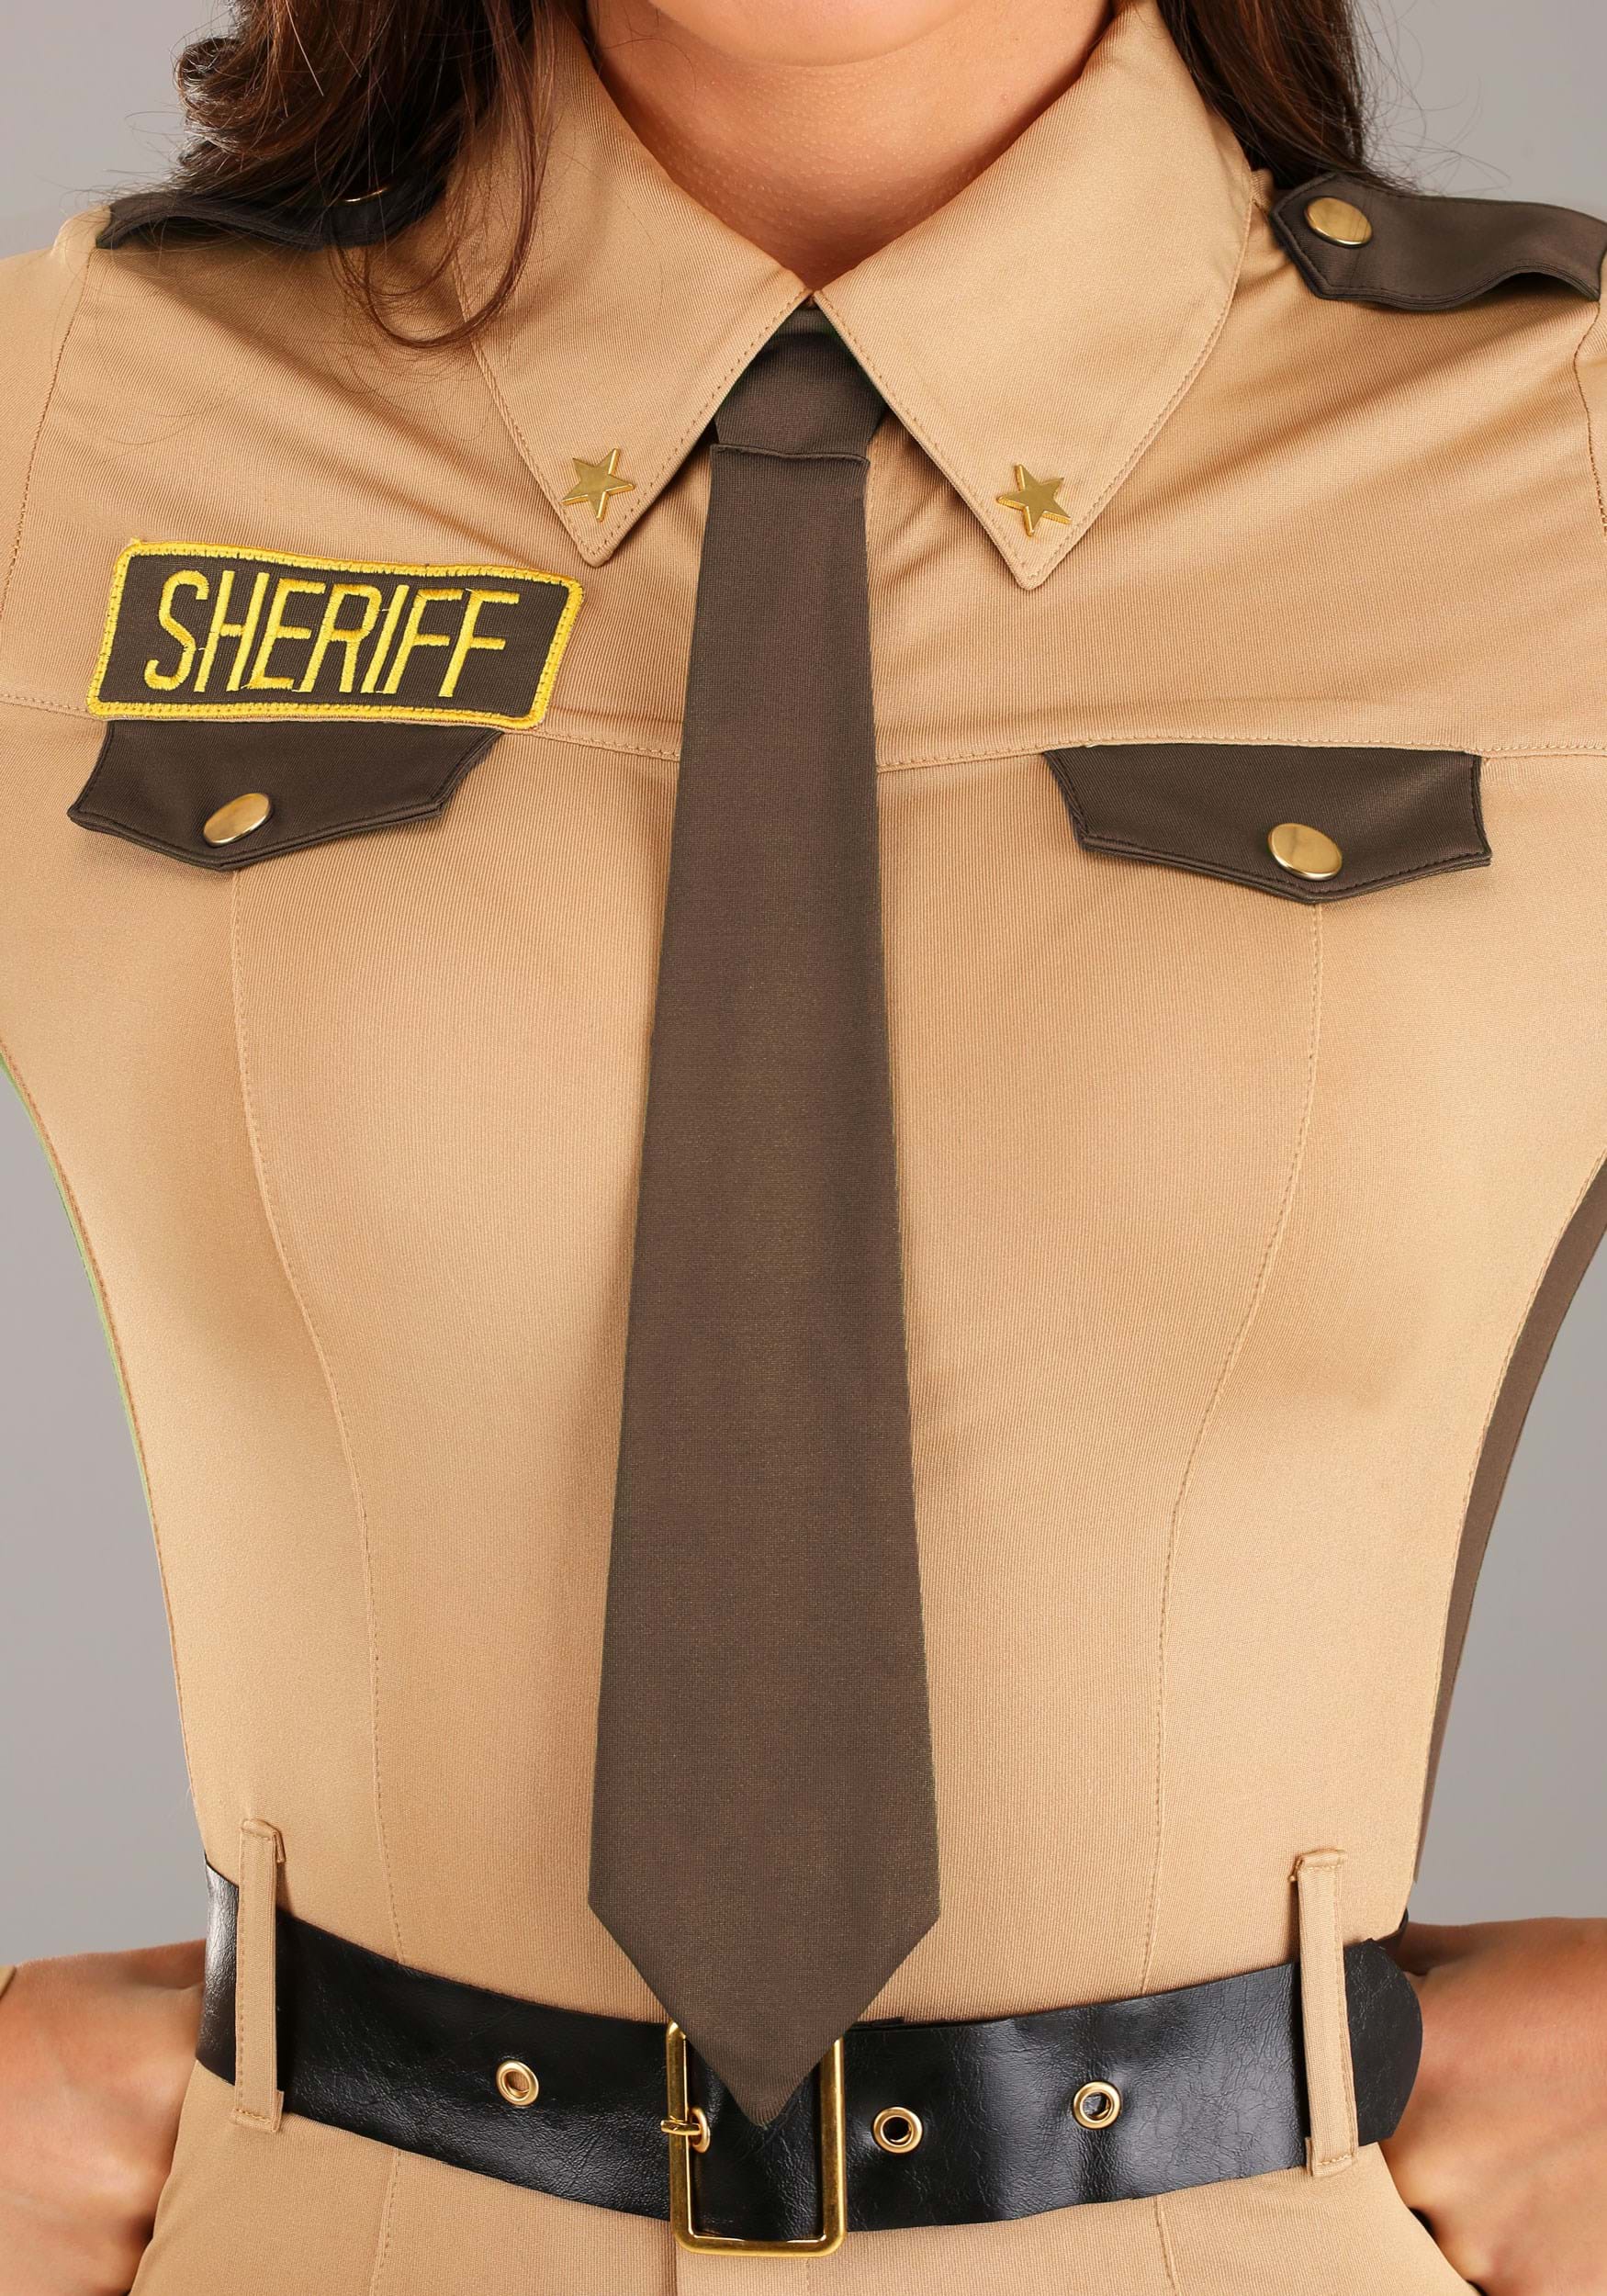 Sexy Sheriff Fancy Dress Costume For Women